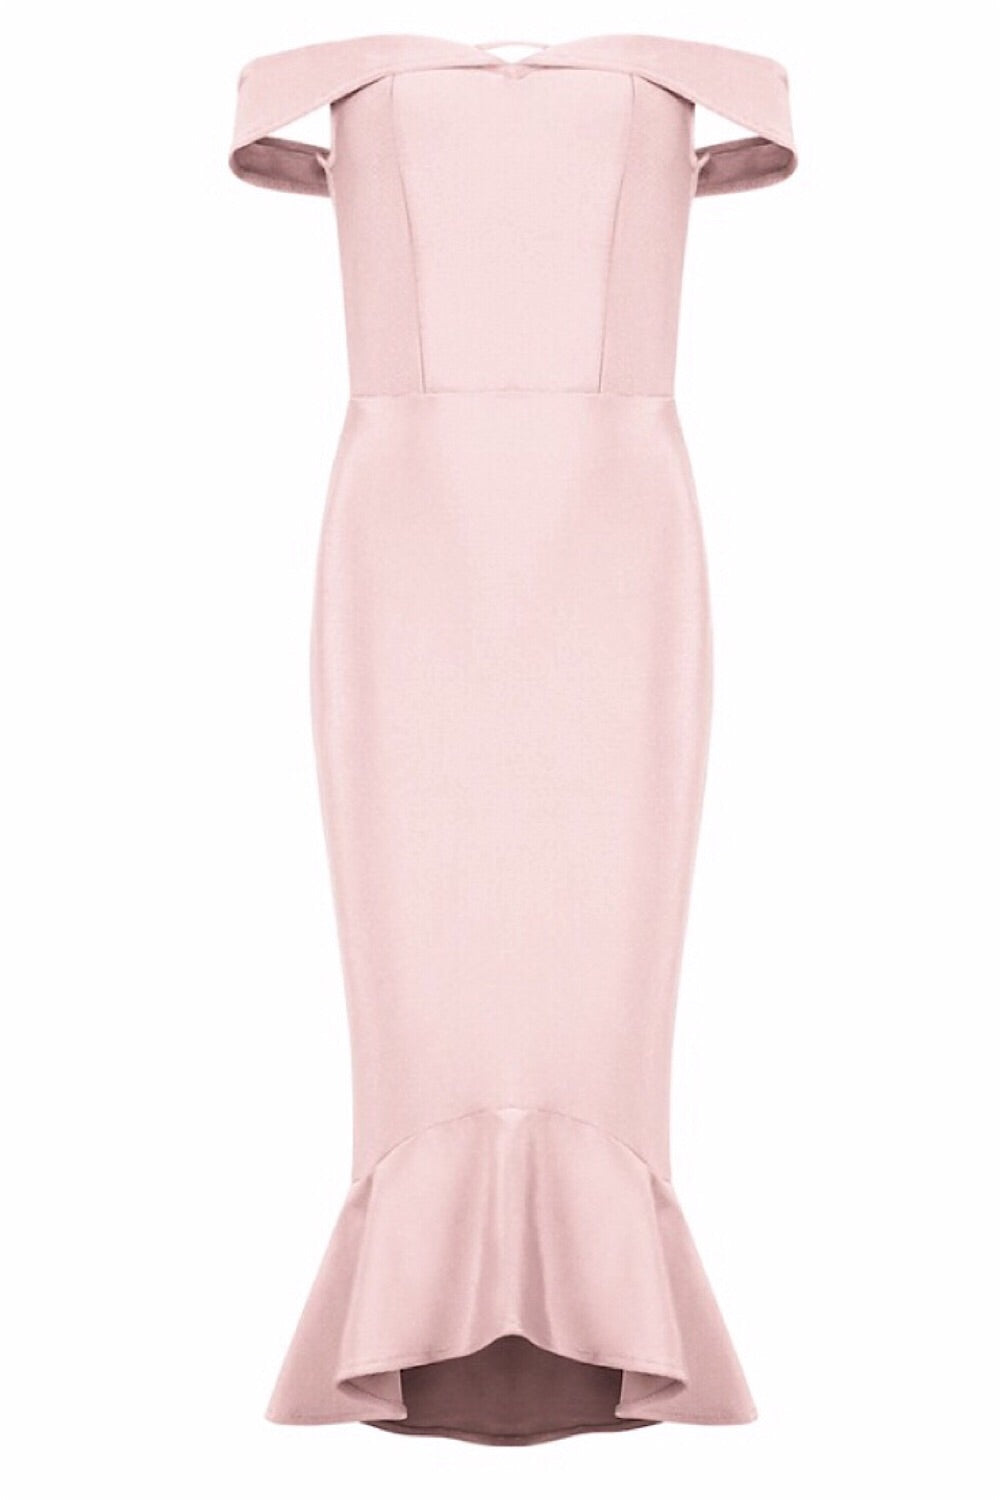 Rendezvous Pink Bandage Dress